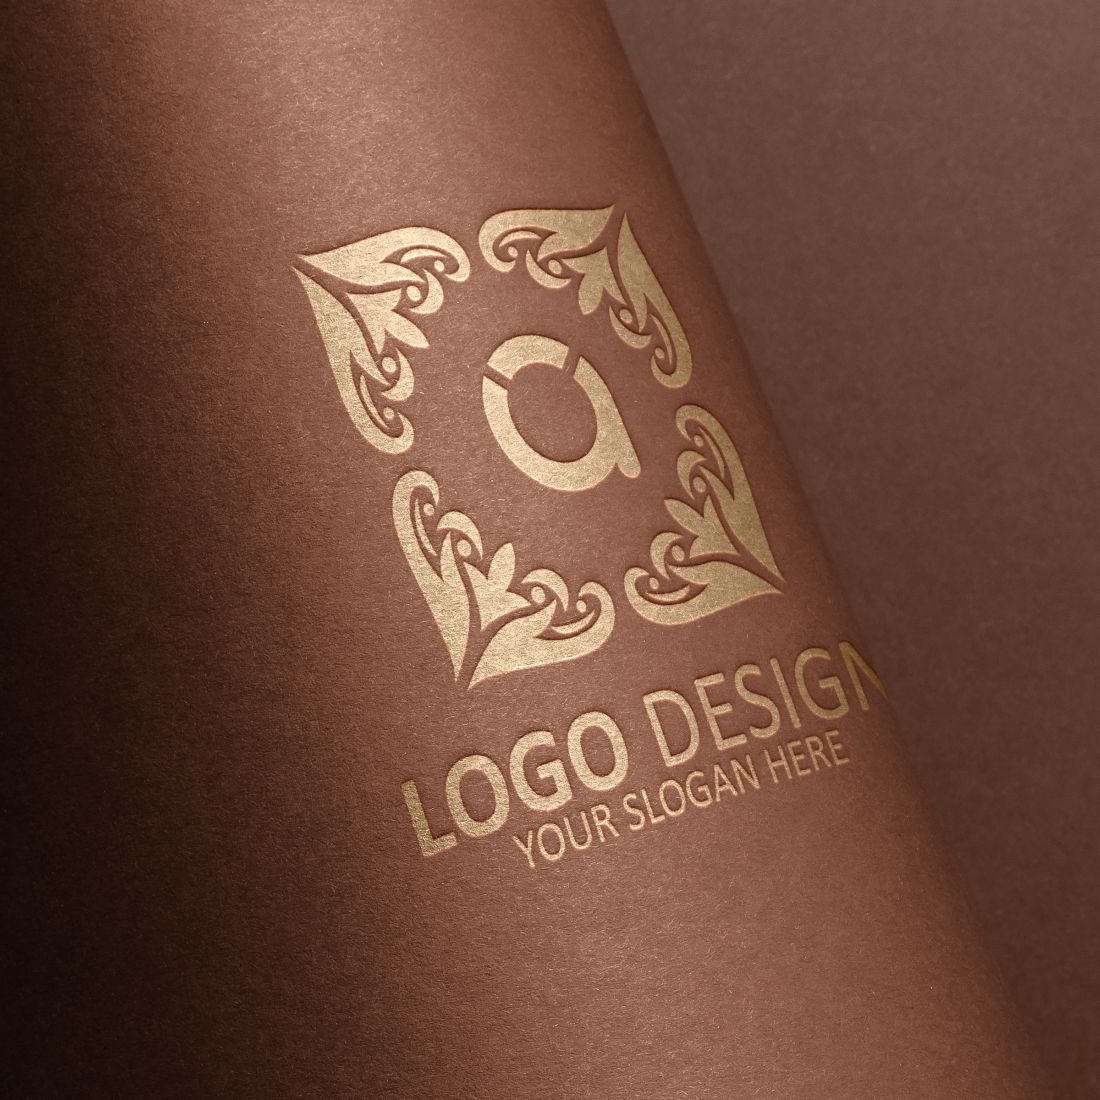 Creative Luxury A Logo Design Template cover image.